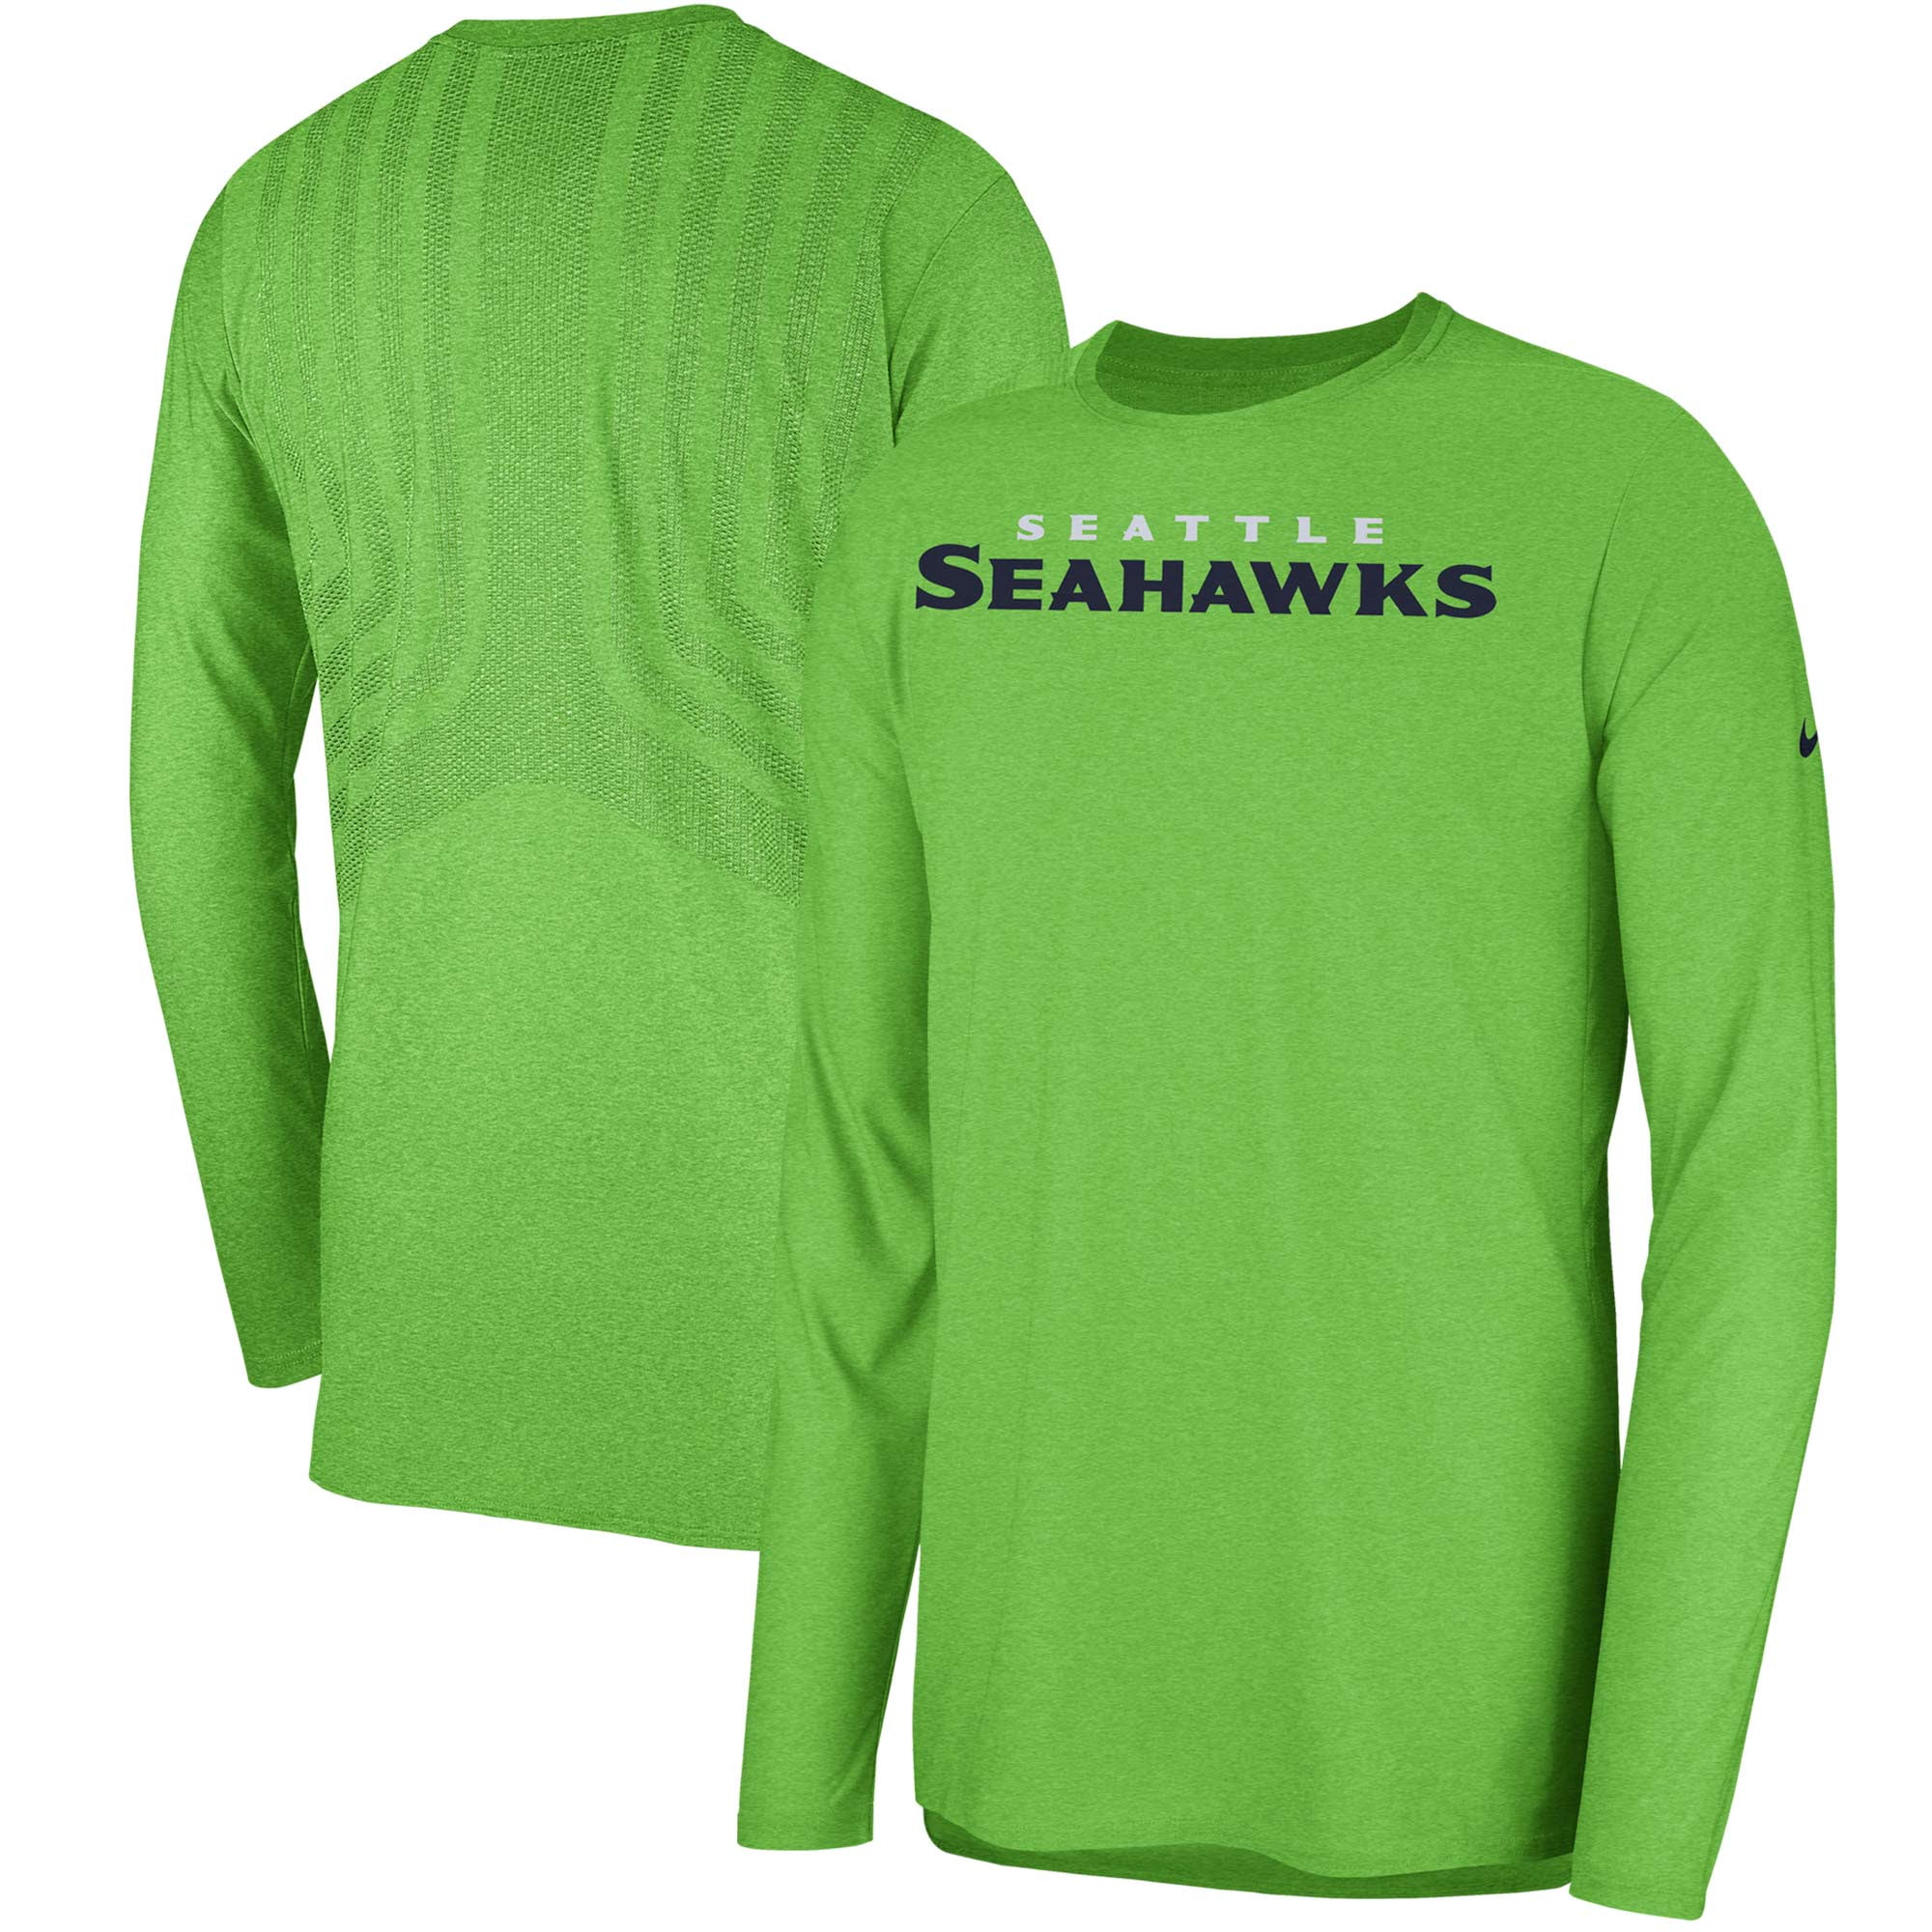 seahawks green t shirt